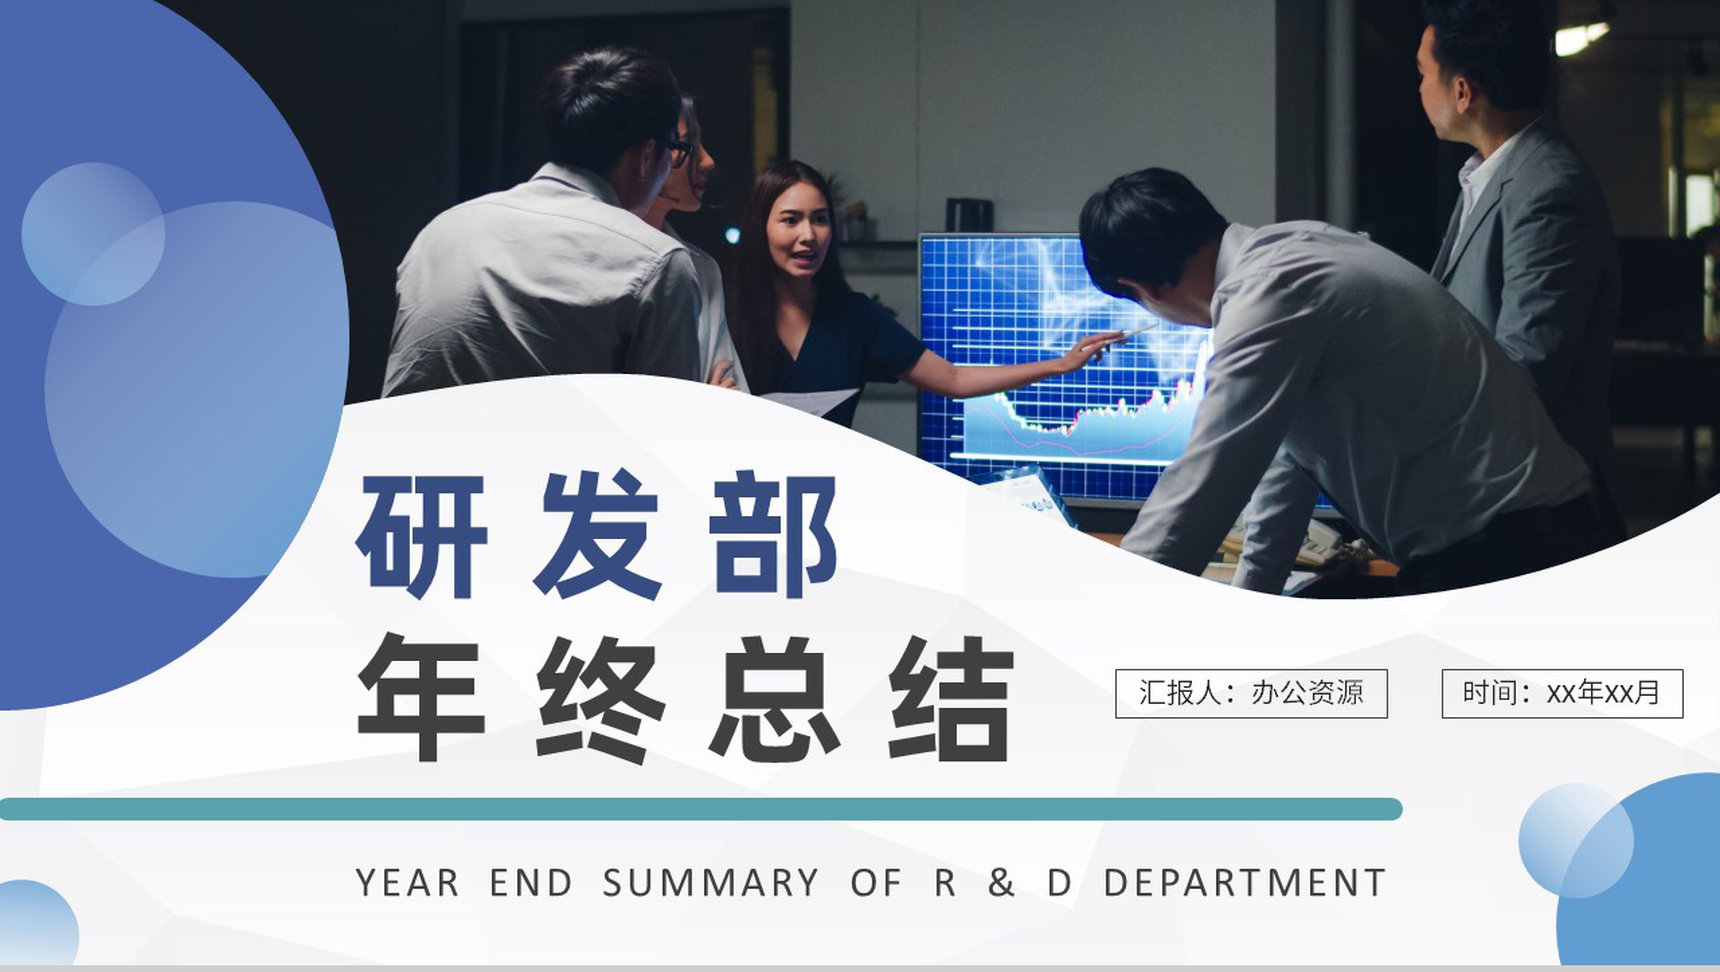 20XX福田工商服务中心工作总结暨新年计划PPT模板-1